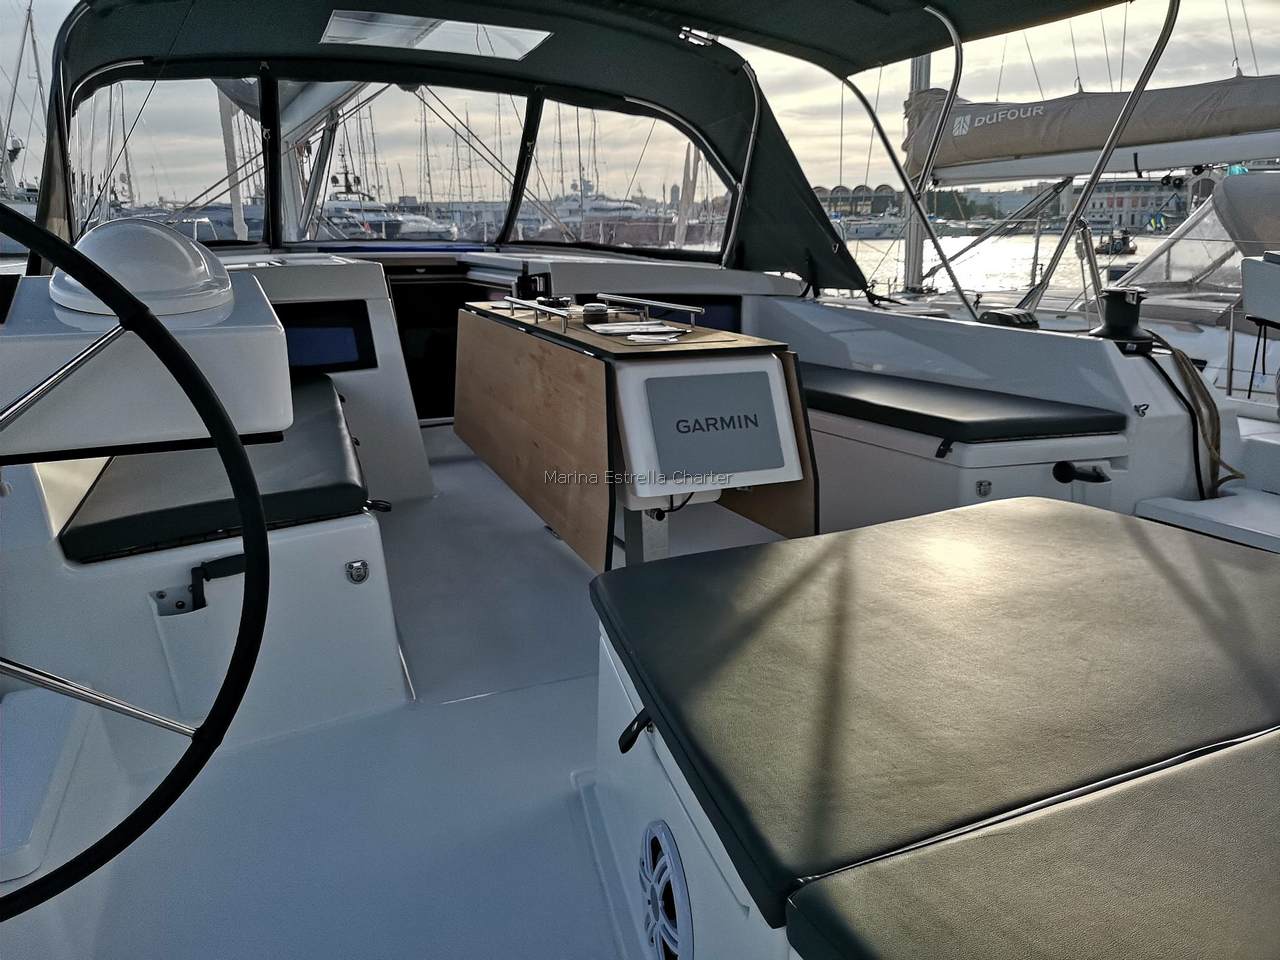 Sail boat FOR CHARTER, year 2021 brand Dufour and model 470, available in Marina de Denia Denia Alicante España